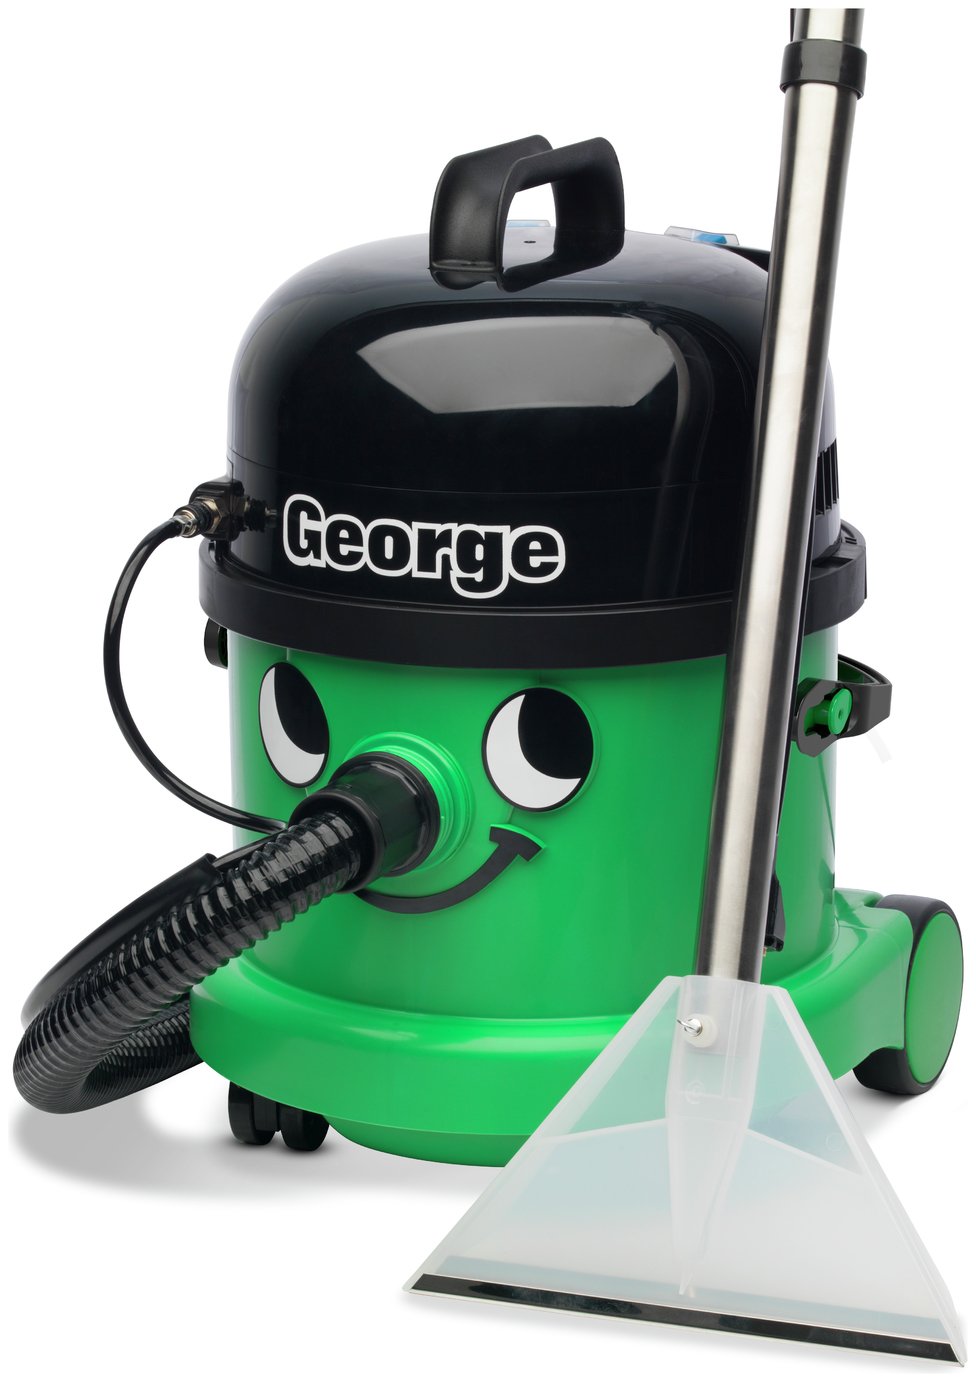 George Corded Carpet Cleaner